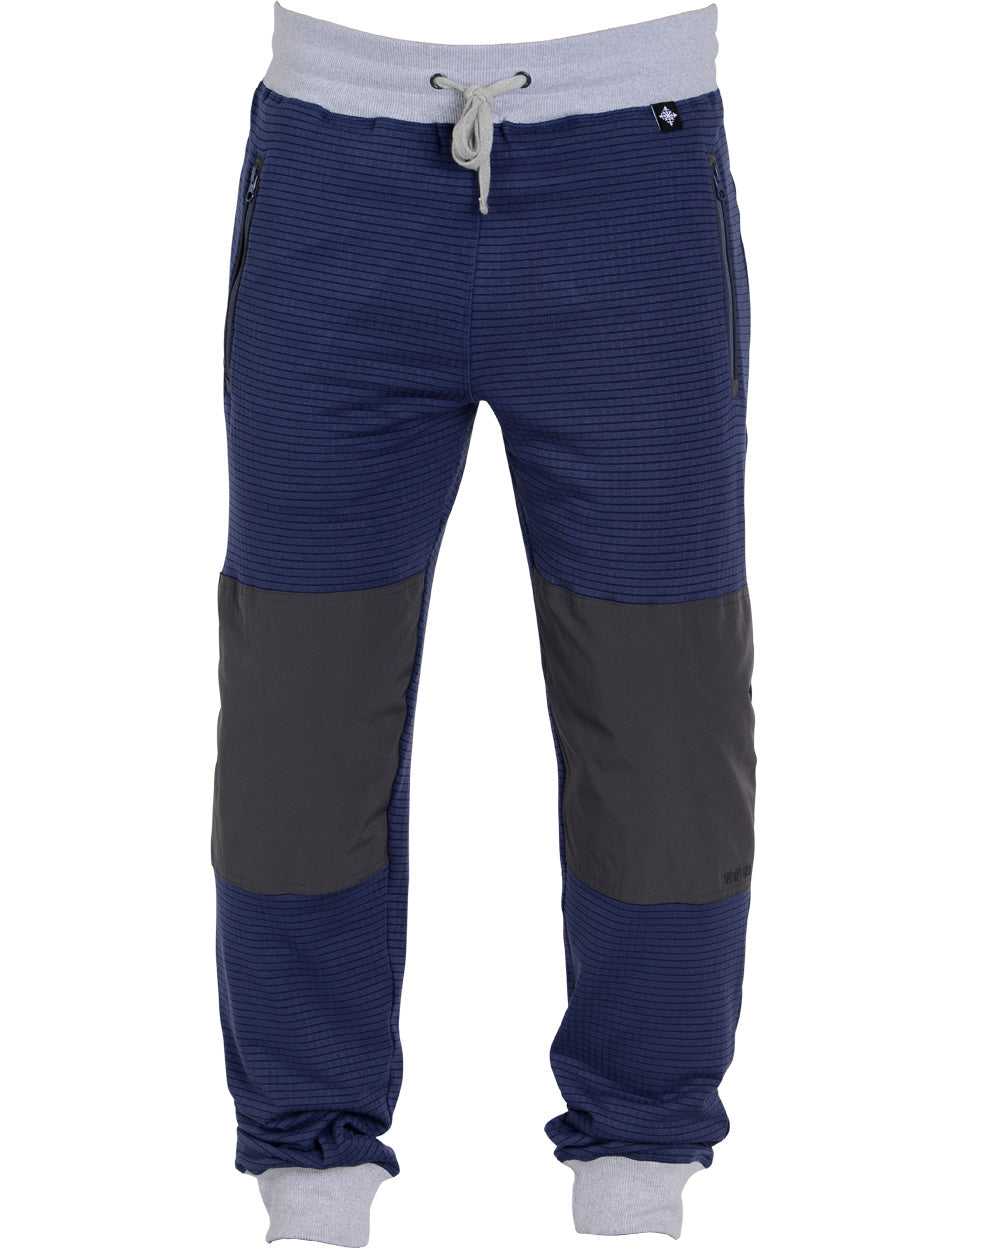 Lynx Tech Fleece Pants - Navy/Charcoal - Ski The East